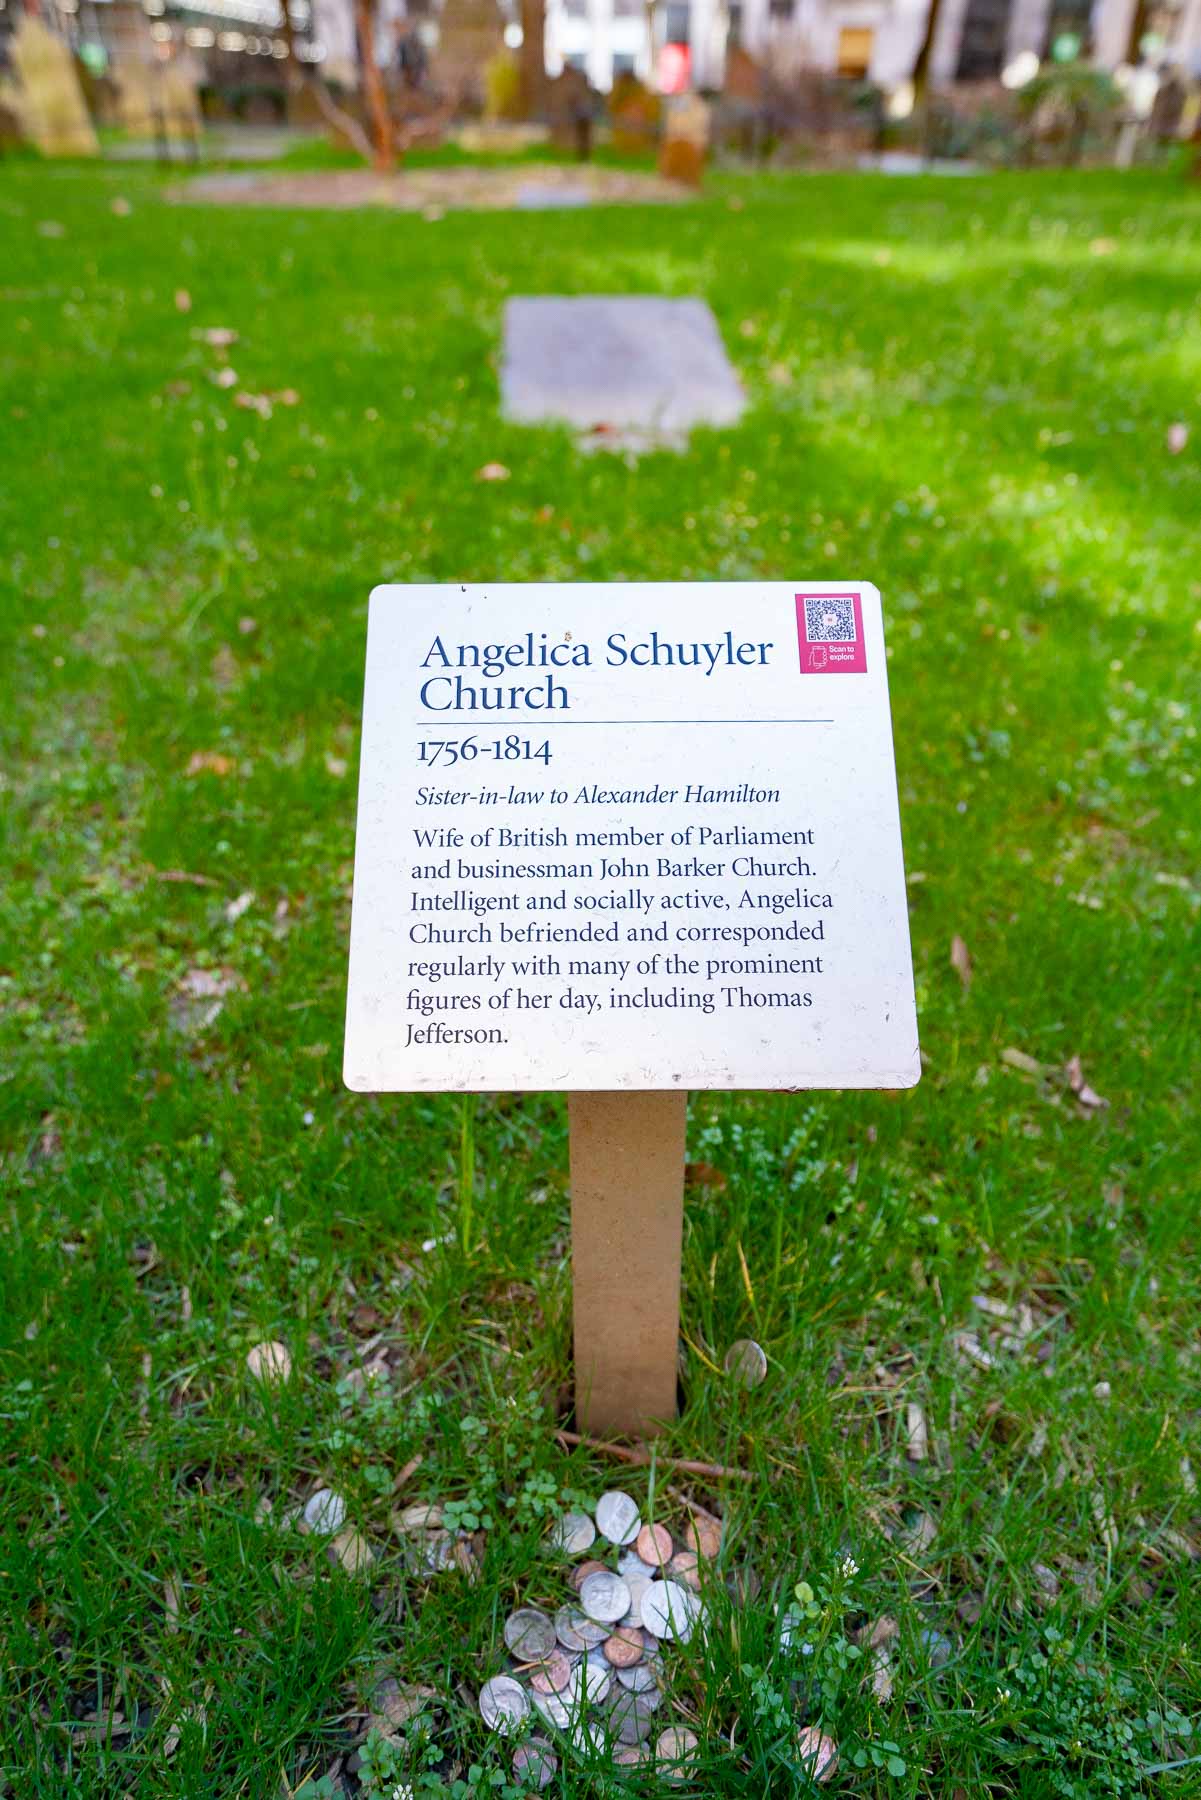 Angelica Schuyler's Marker in Trinity Church's Cemetery, near Alexander Hamilton's Grave in NYC